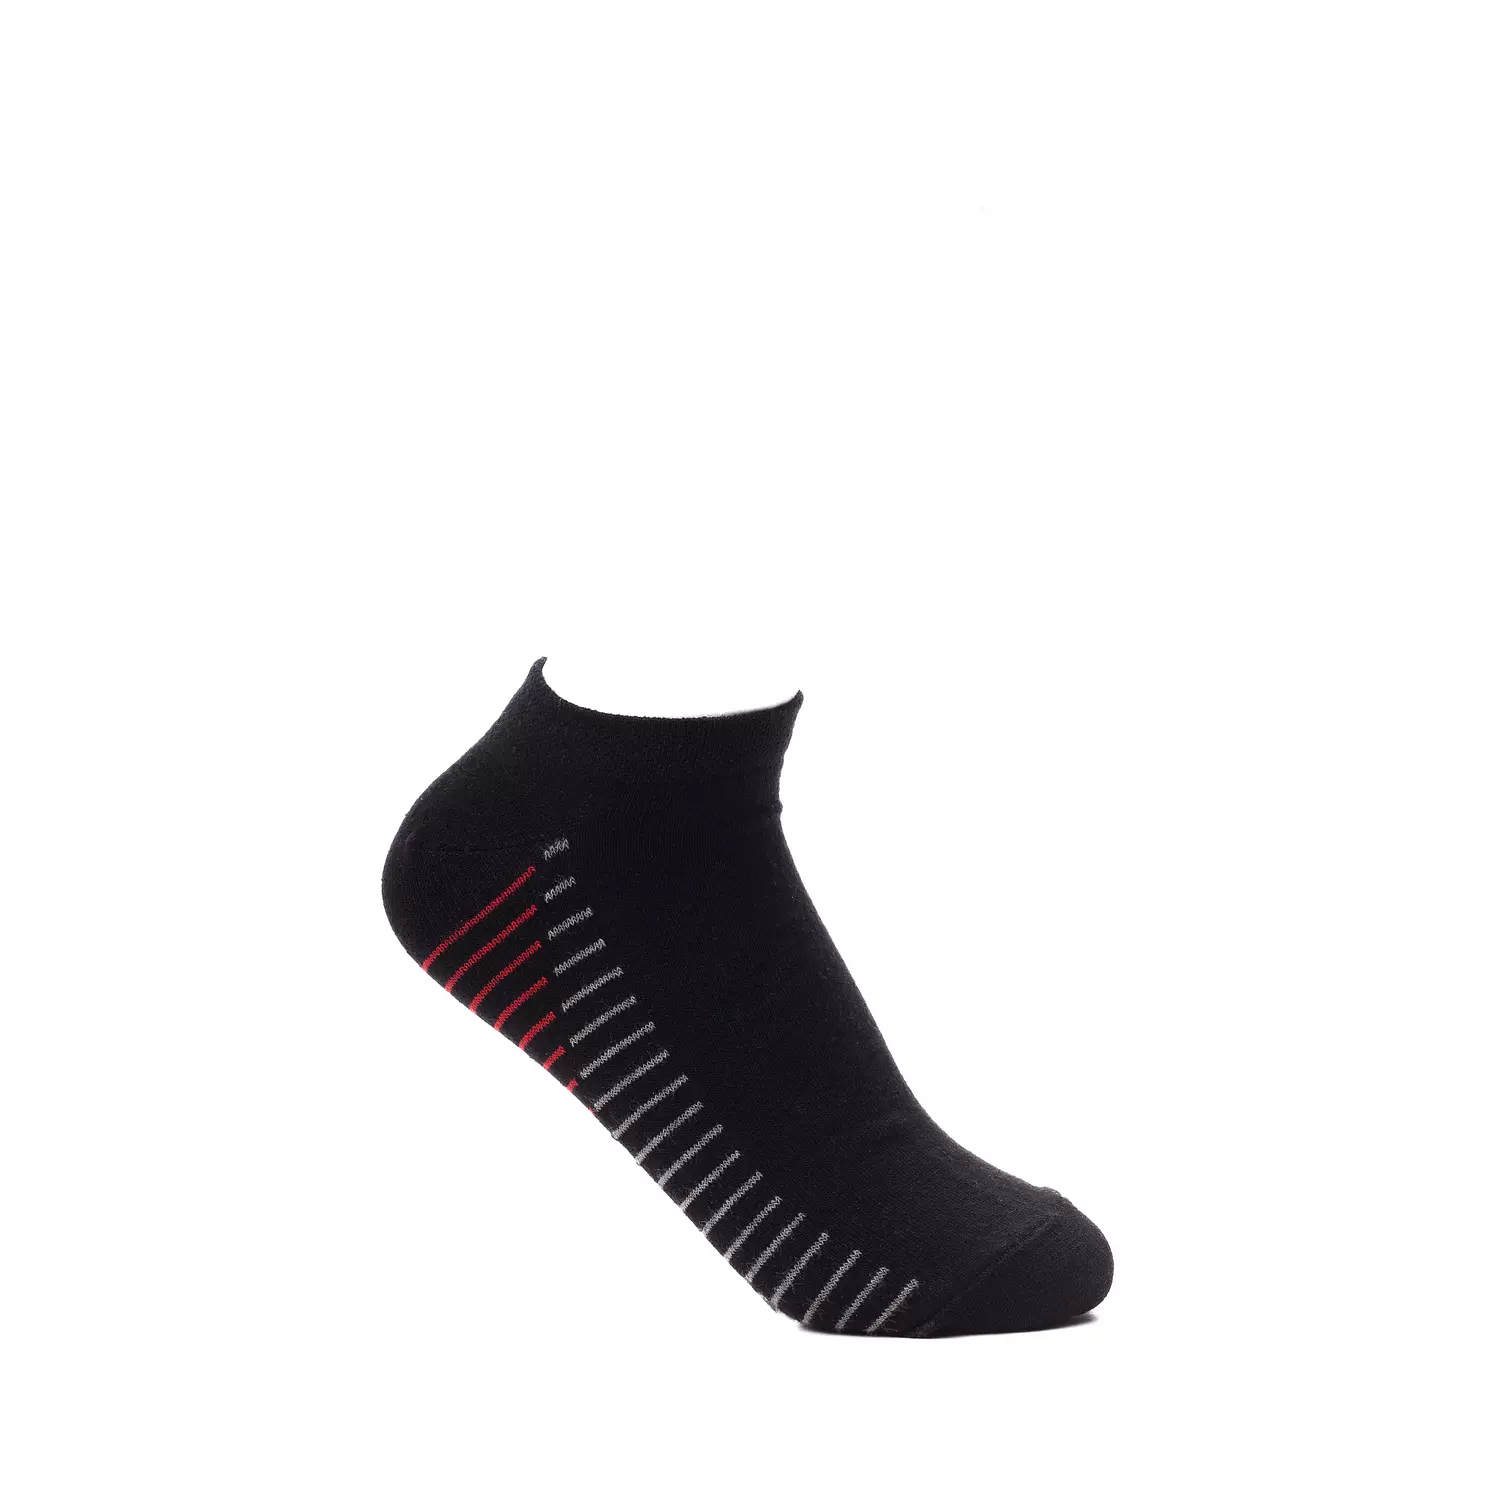 Viva Lowcut casual Socks for men's hover image